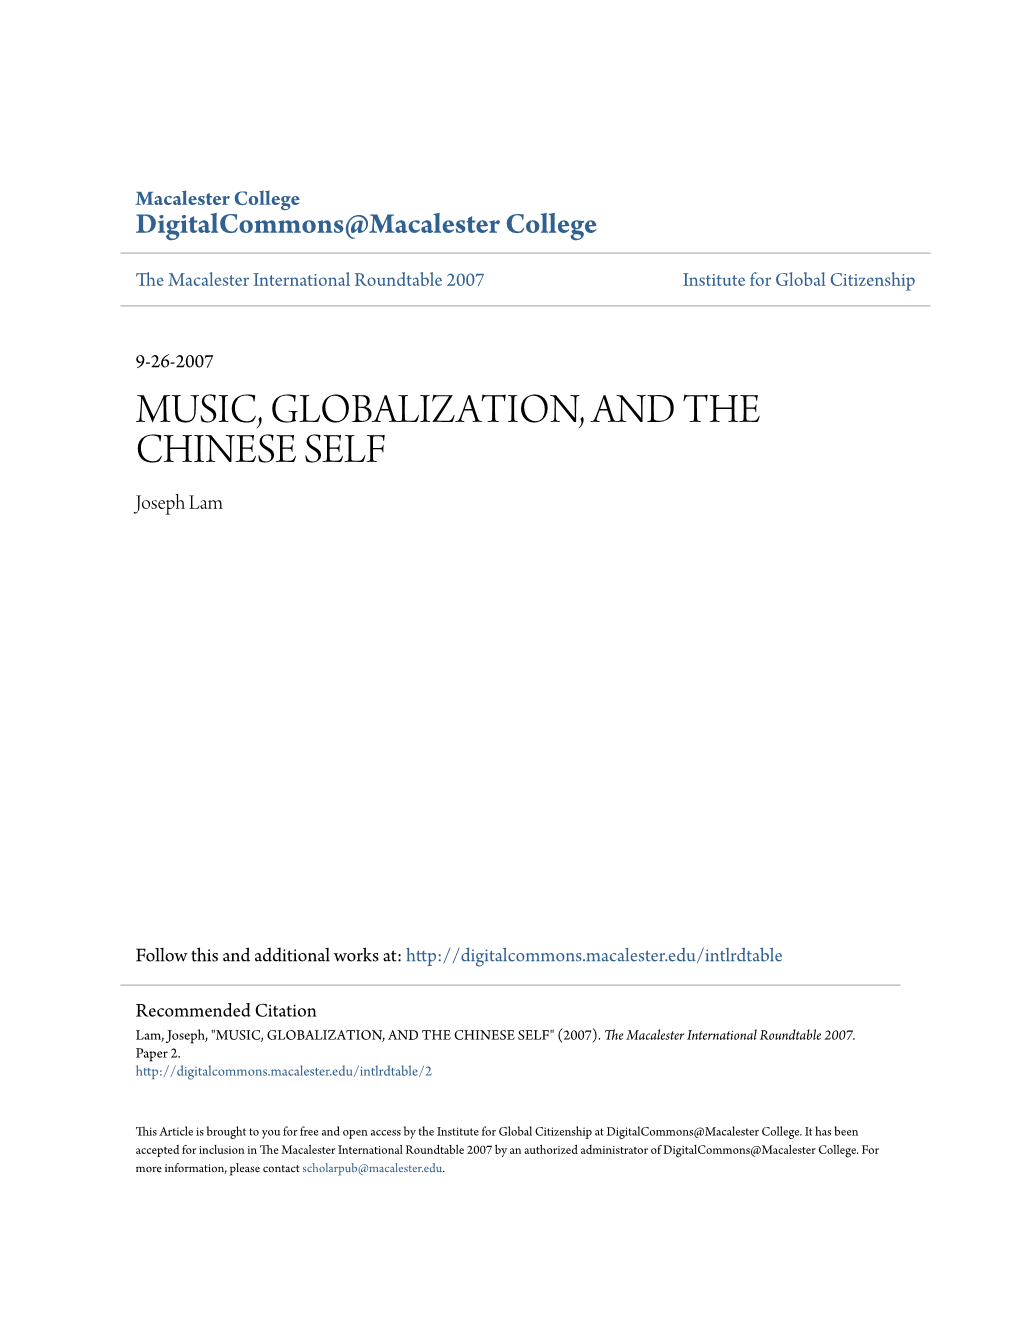 MUSIC, GLOBALIZATION, and the CHINESE SELF Joseph Lam